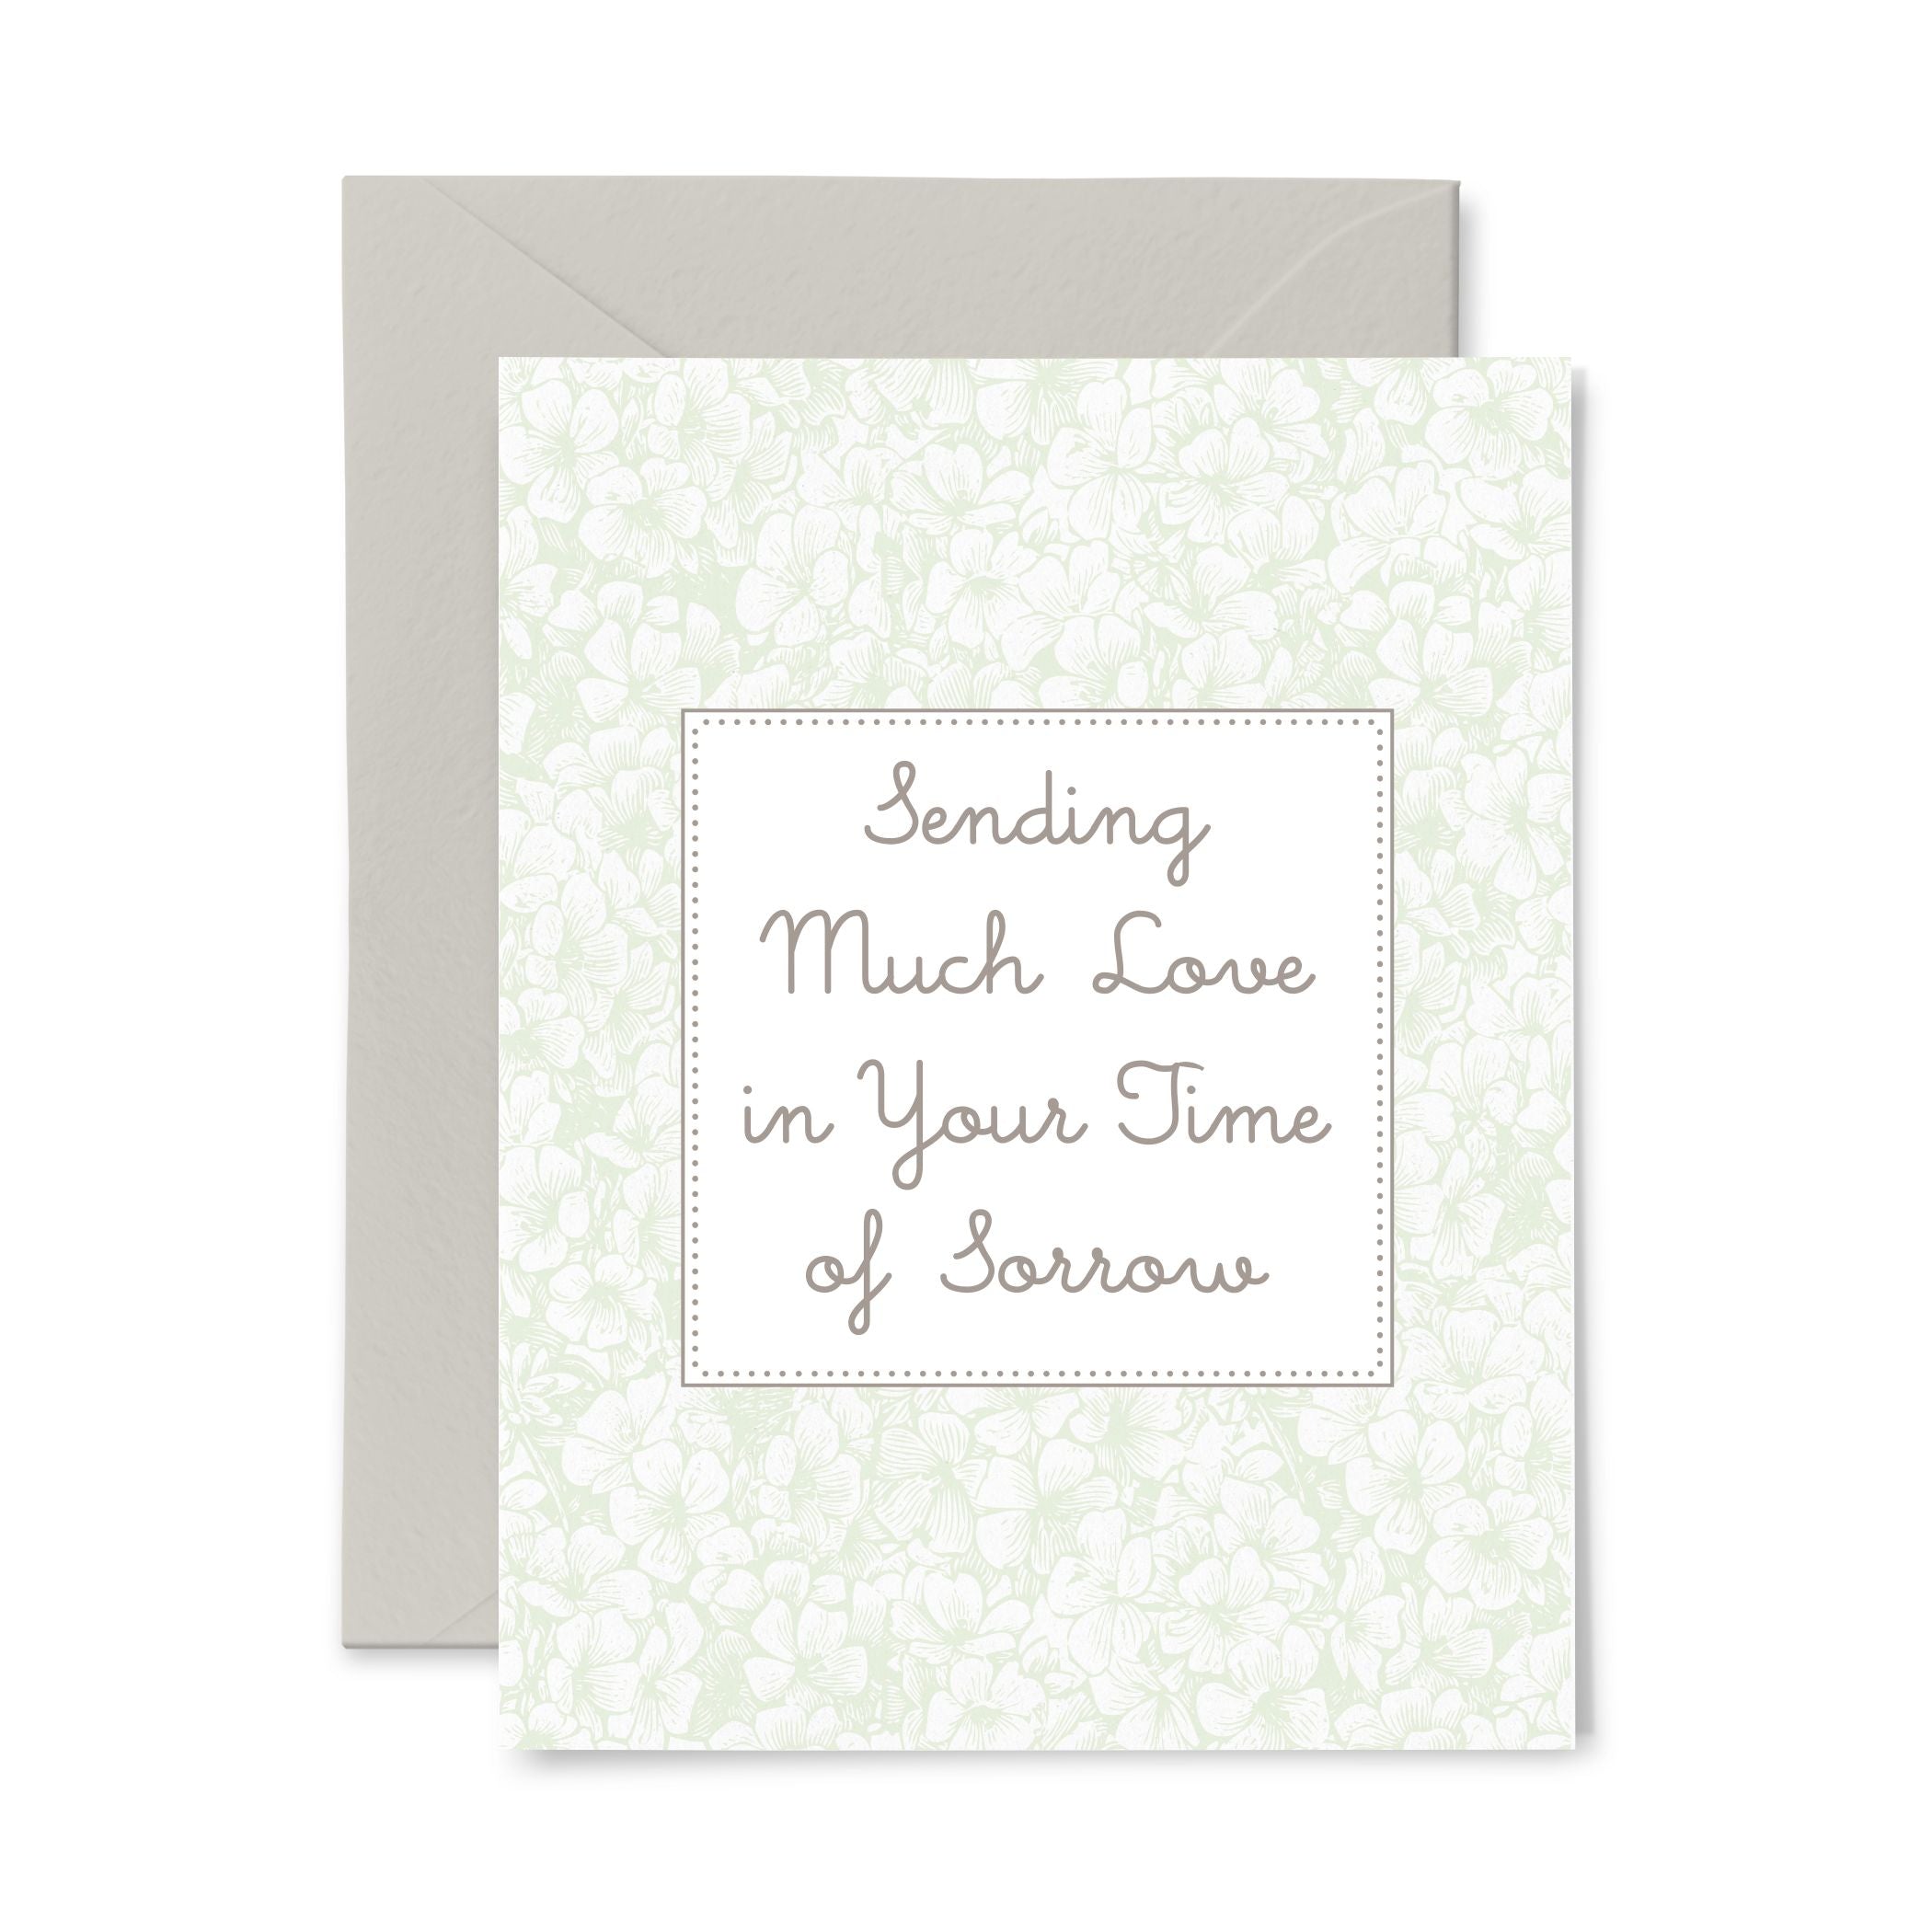 Sending Love | Sympathy | Letterpress Greeting Card